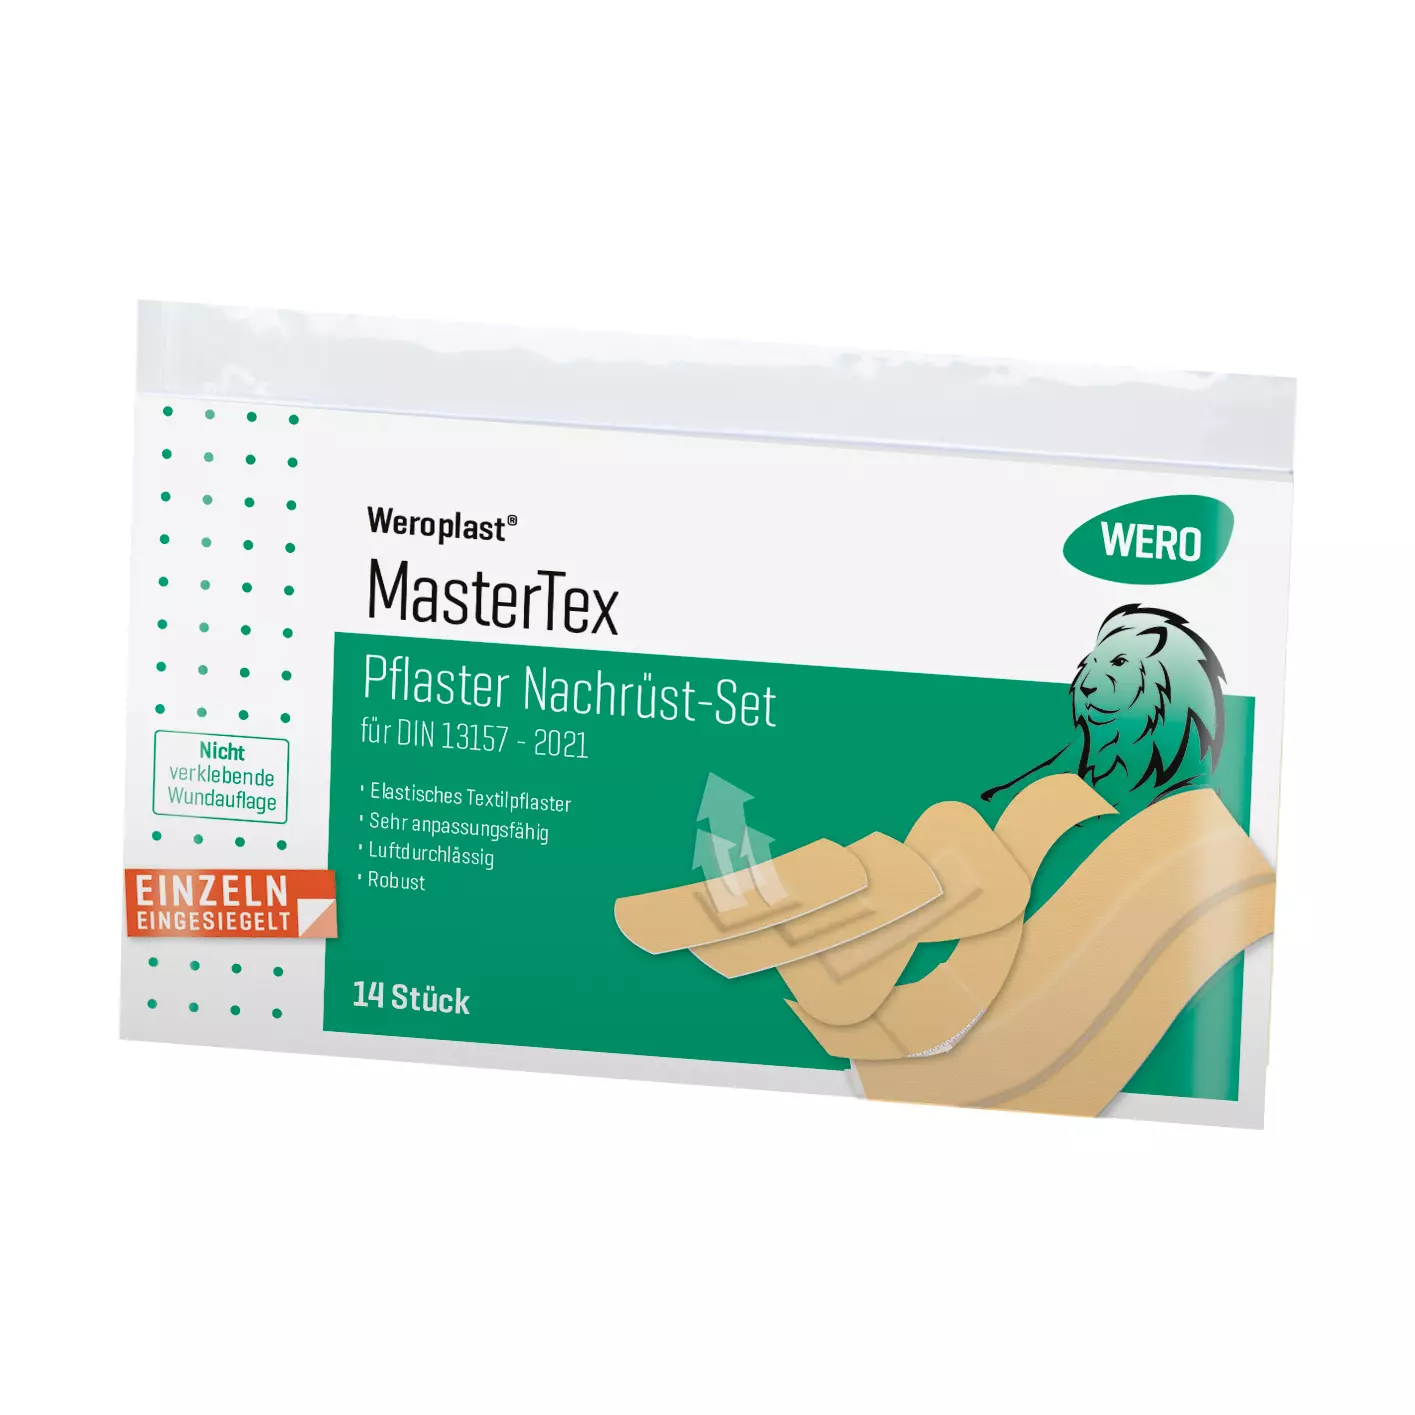 Weroplast® MasterTex plaster set - retrofit set DIN 13157 - 2021